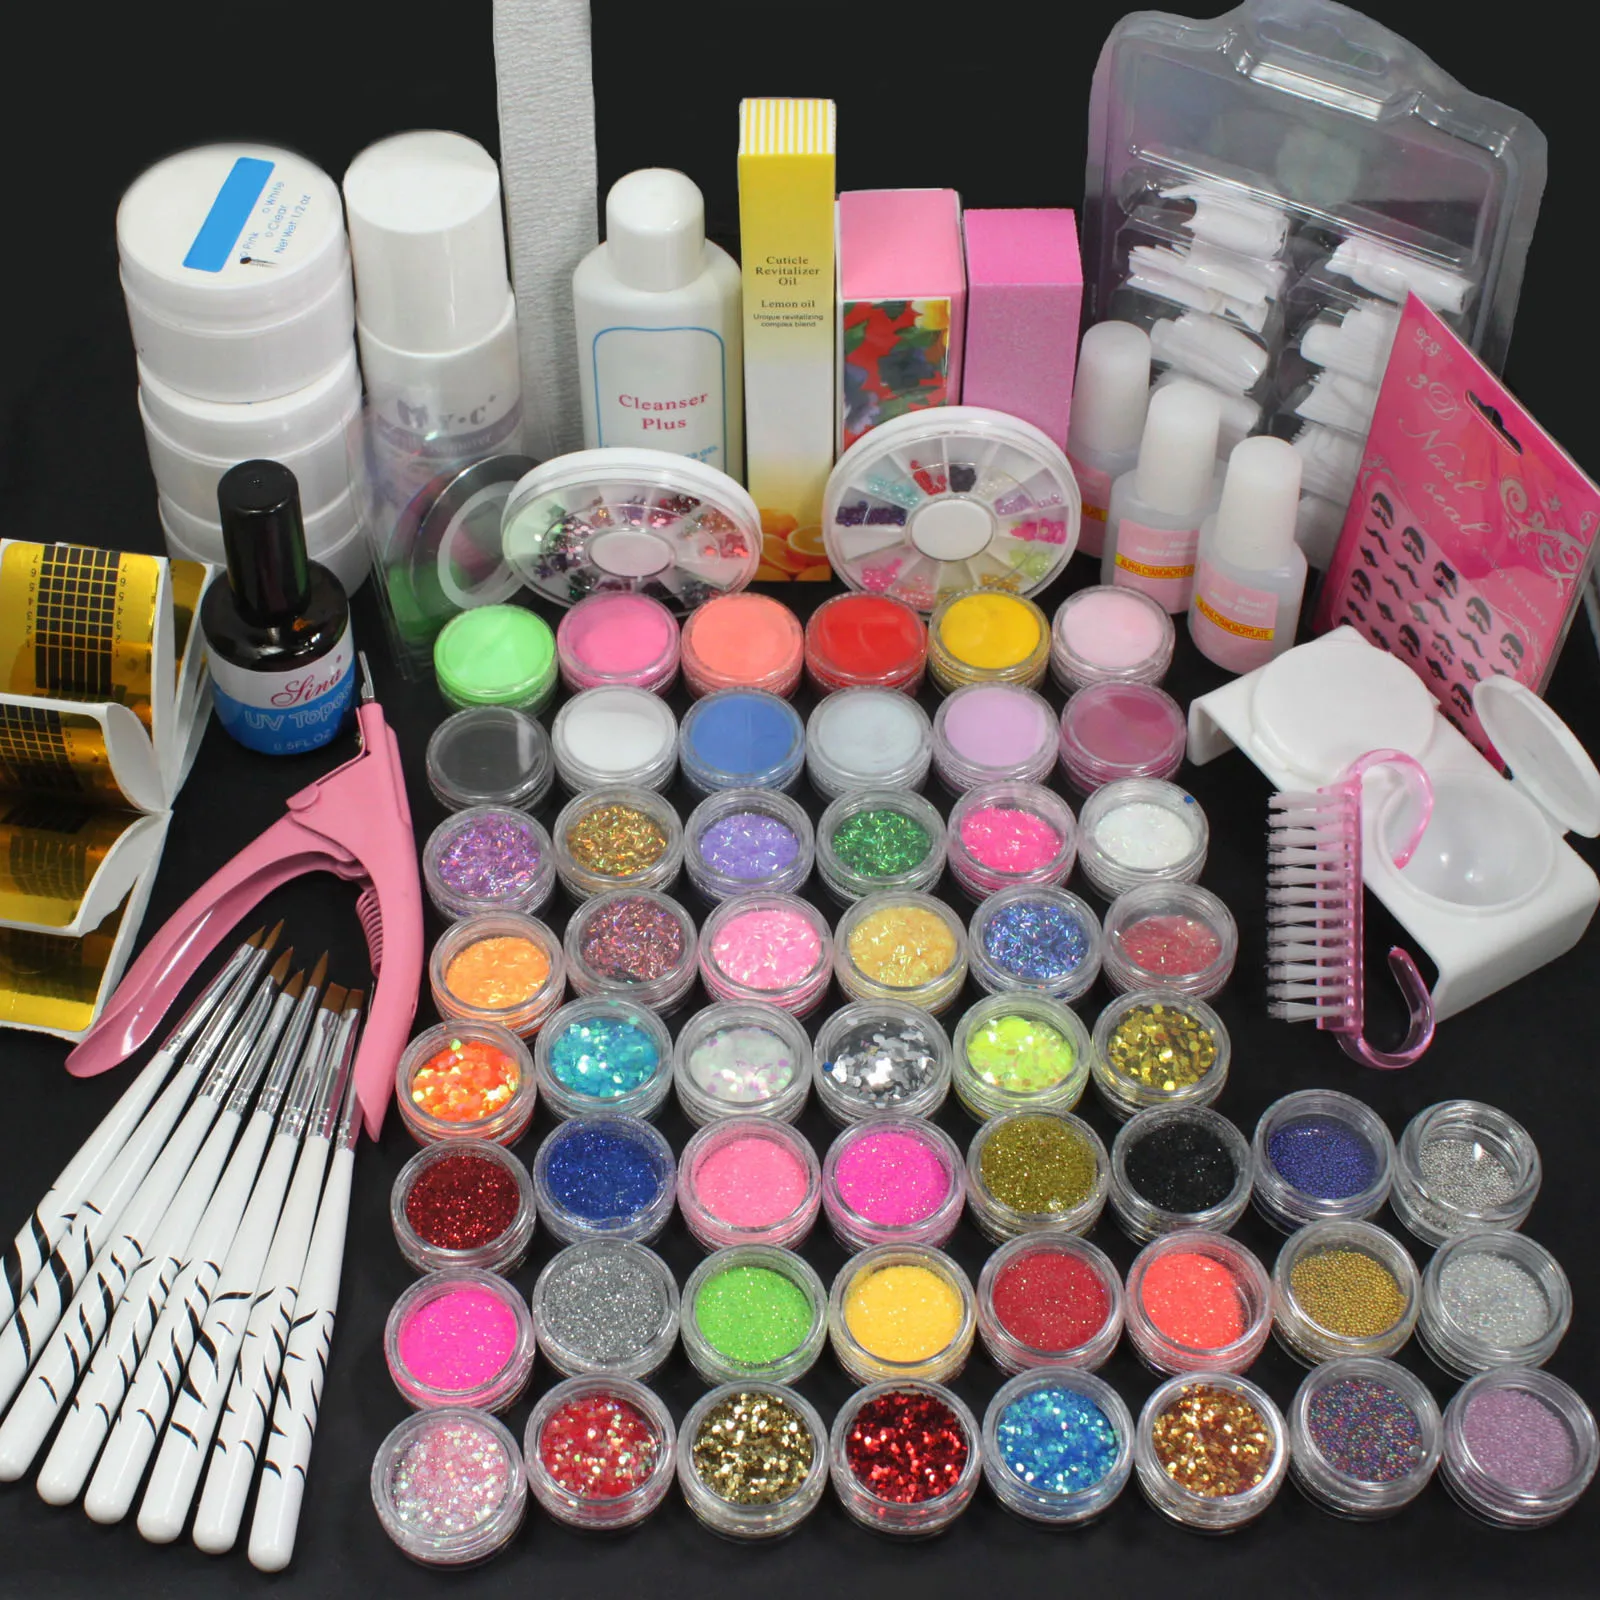 Pro 27in1 Nail Art Brush Glue Glitter Powder Top Coat UV nail Gel Decorations Tools Set #29set